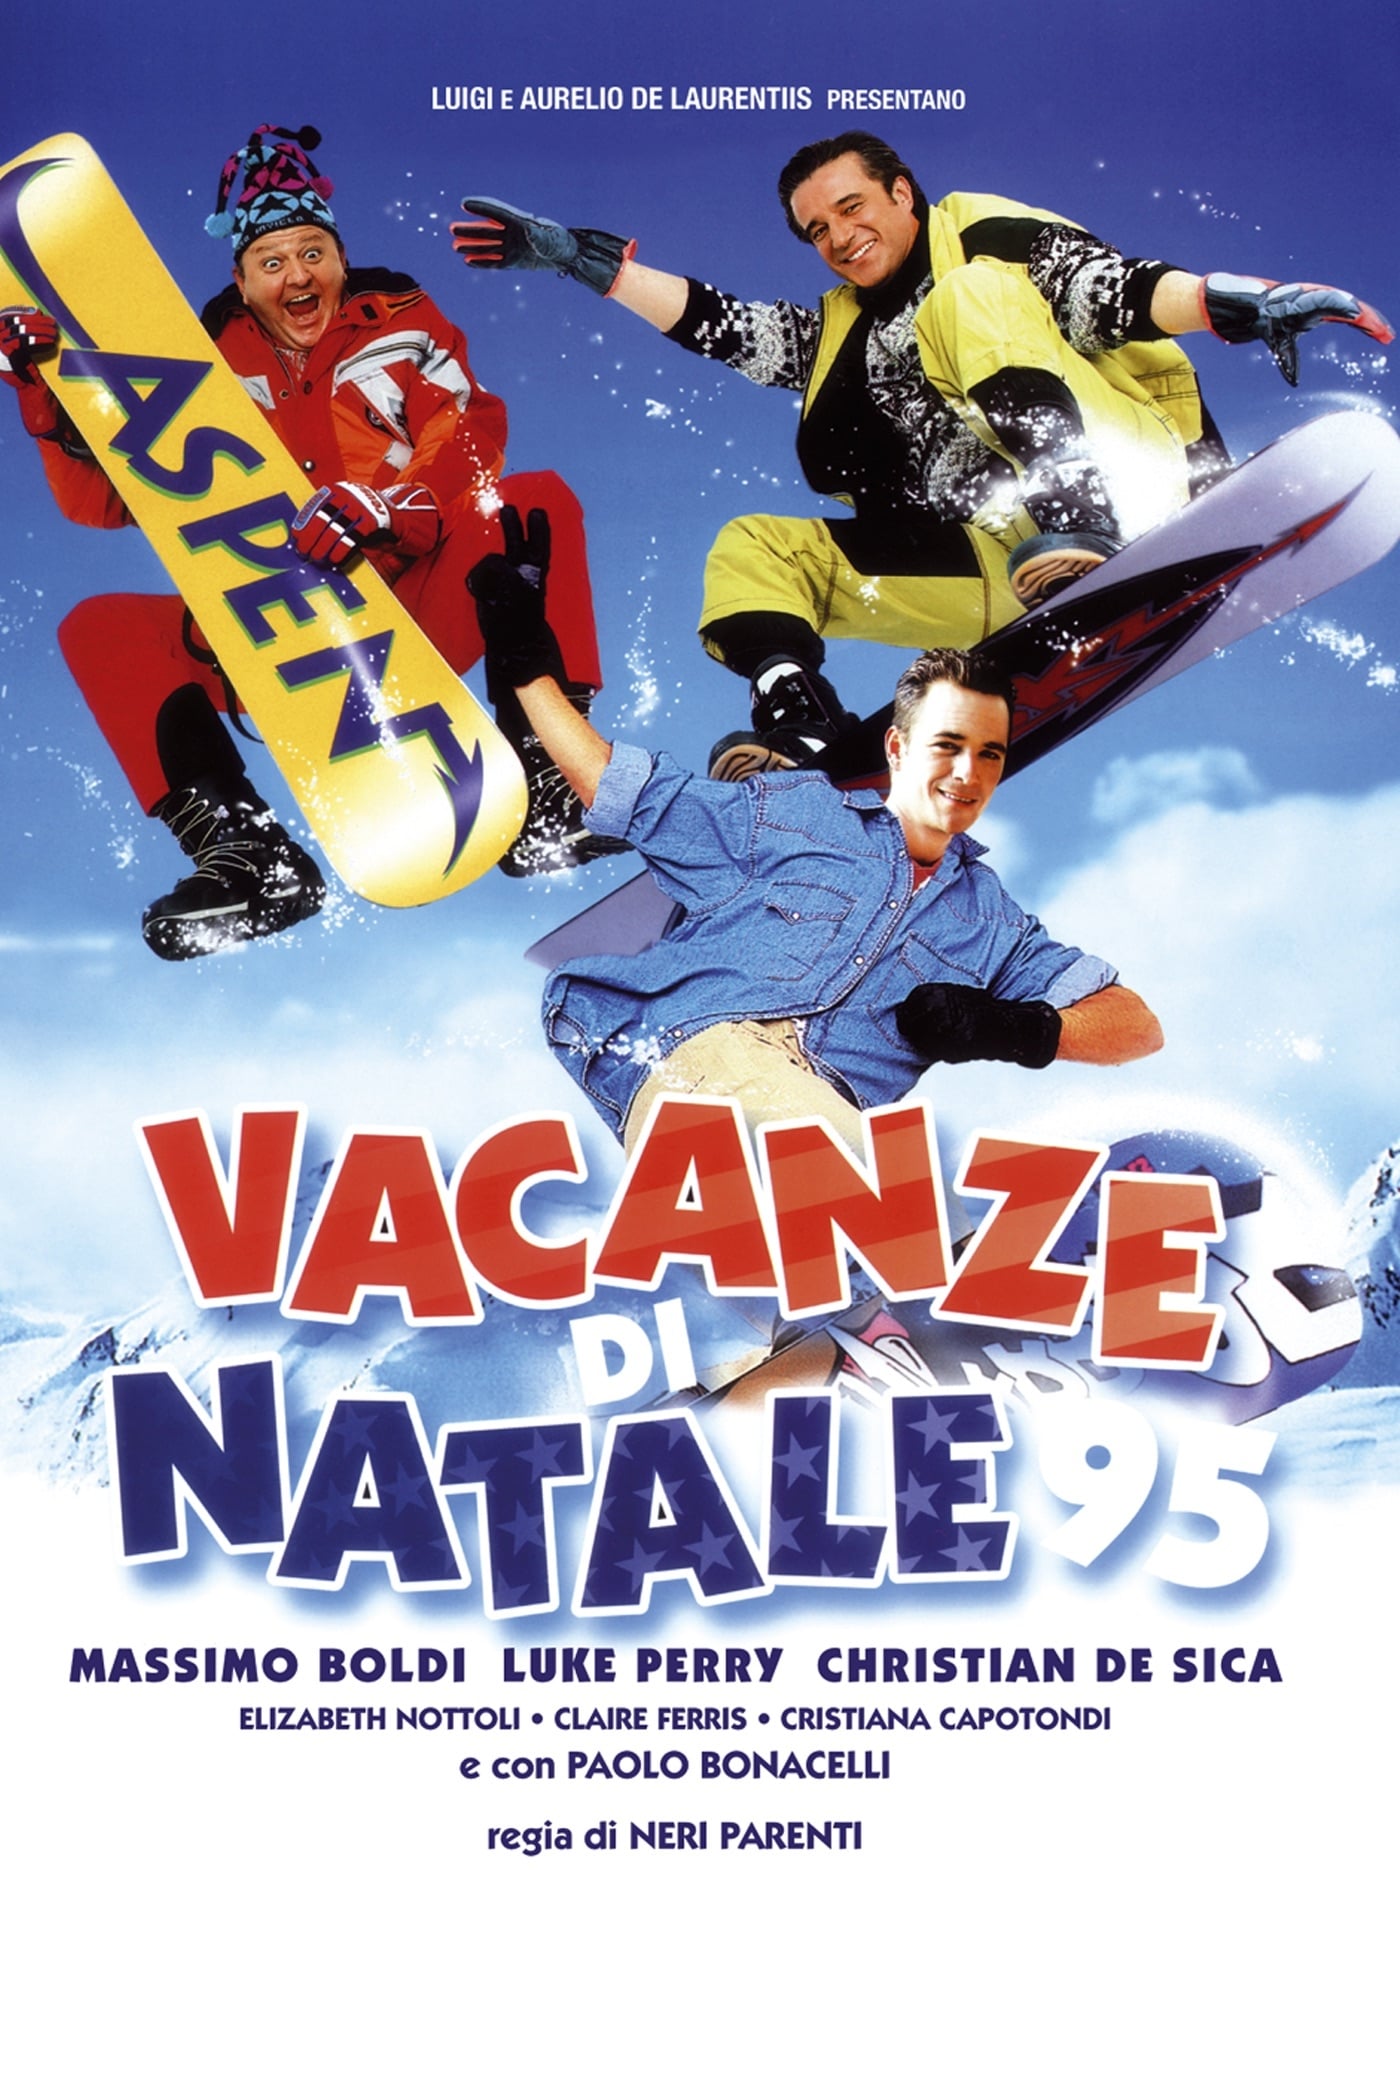 Christmas Vacation '95 (1995)